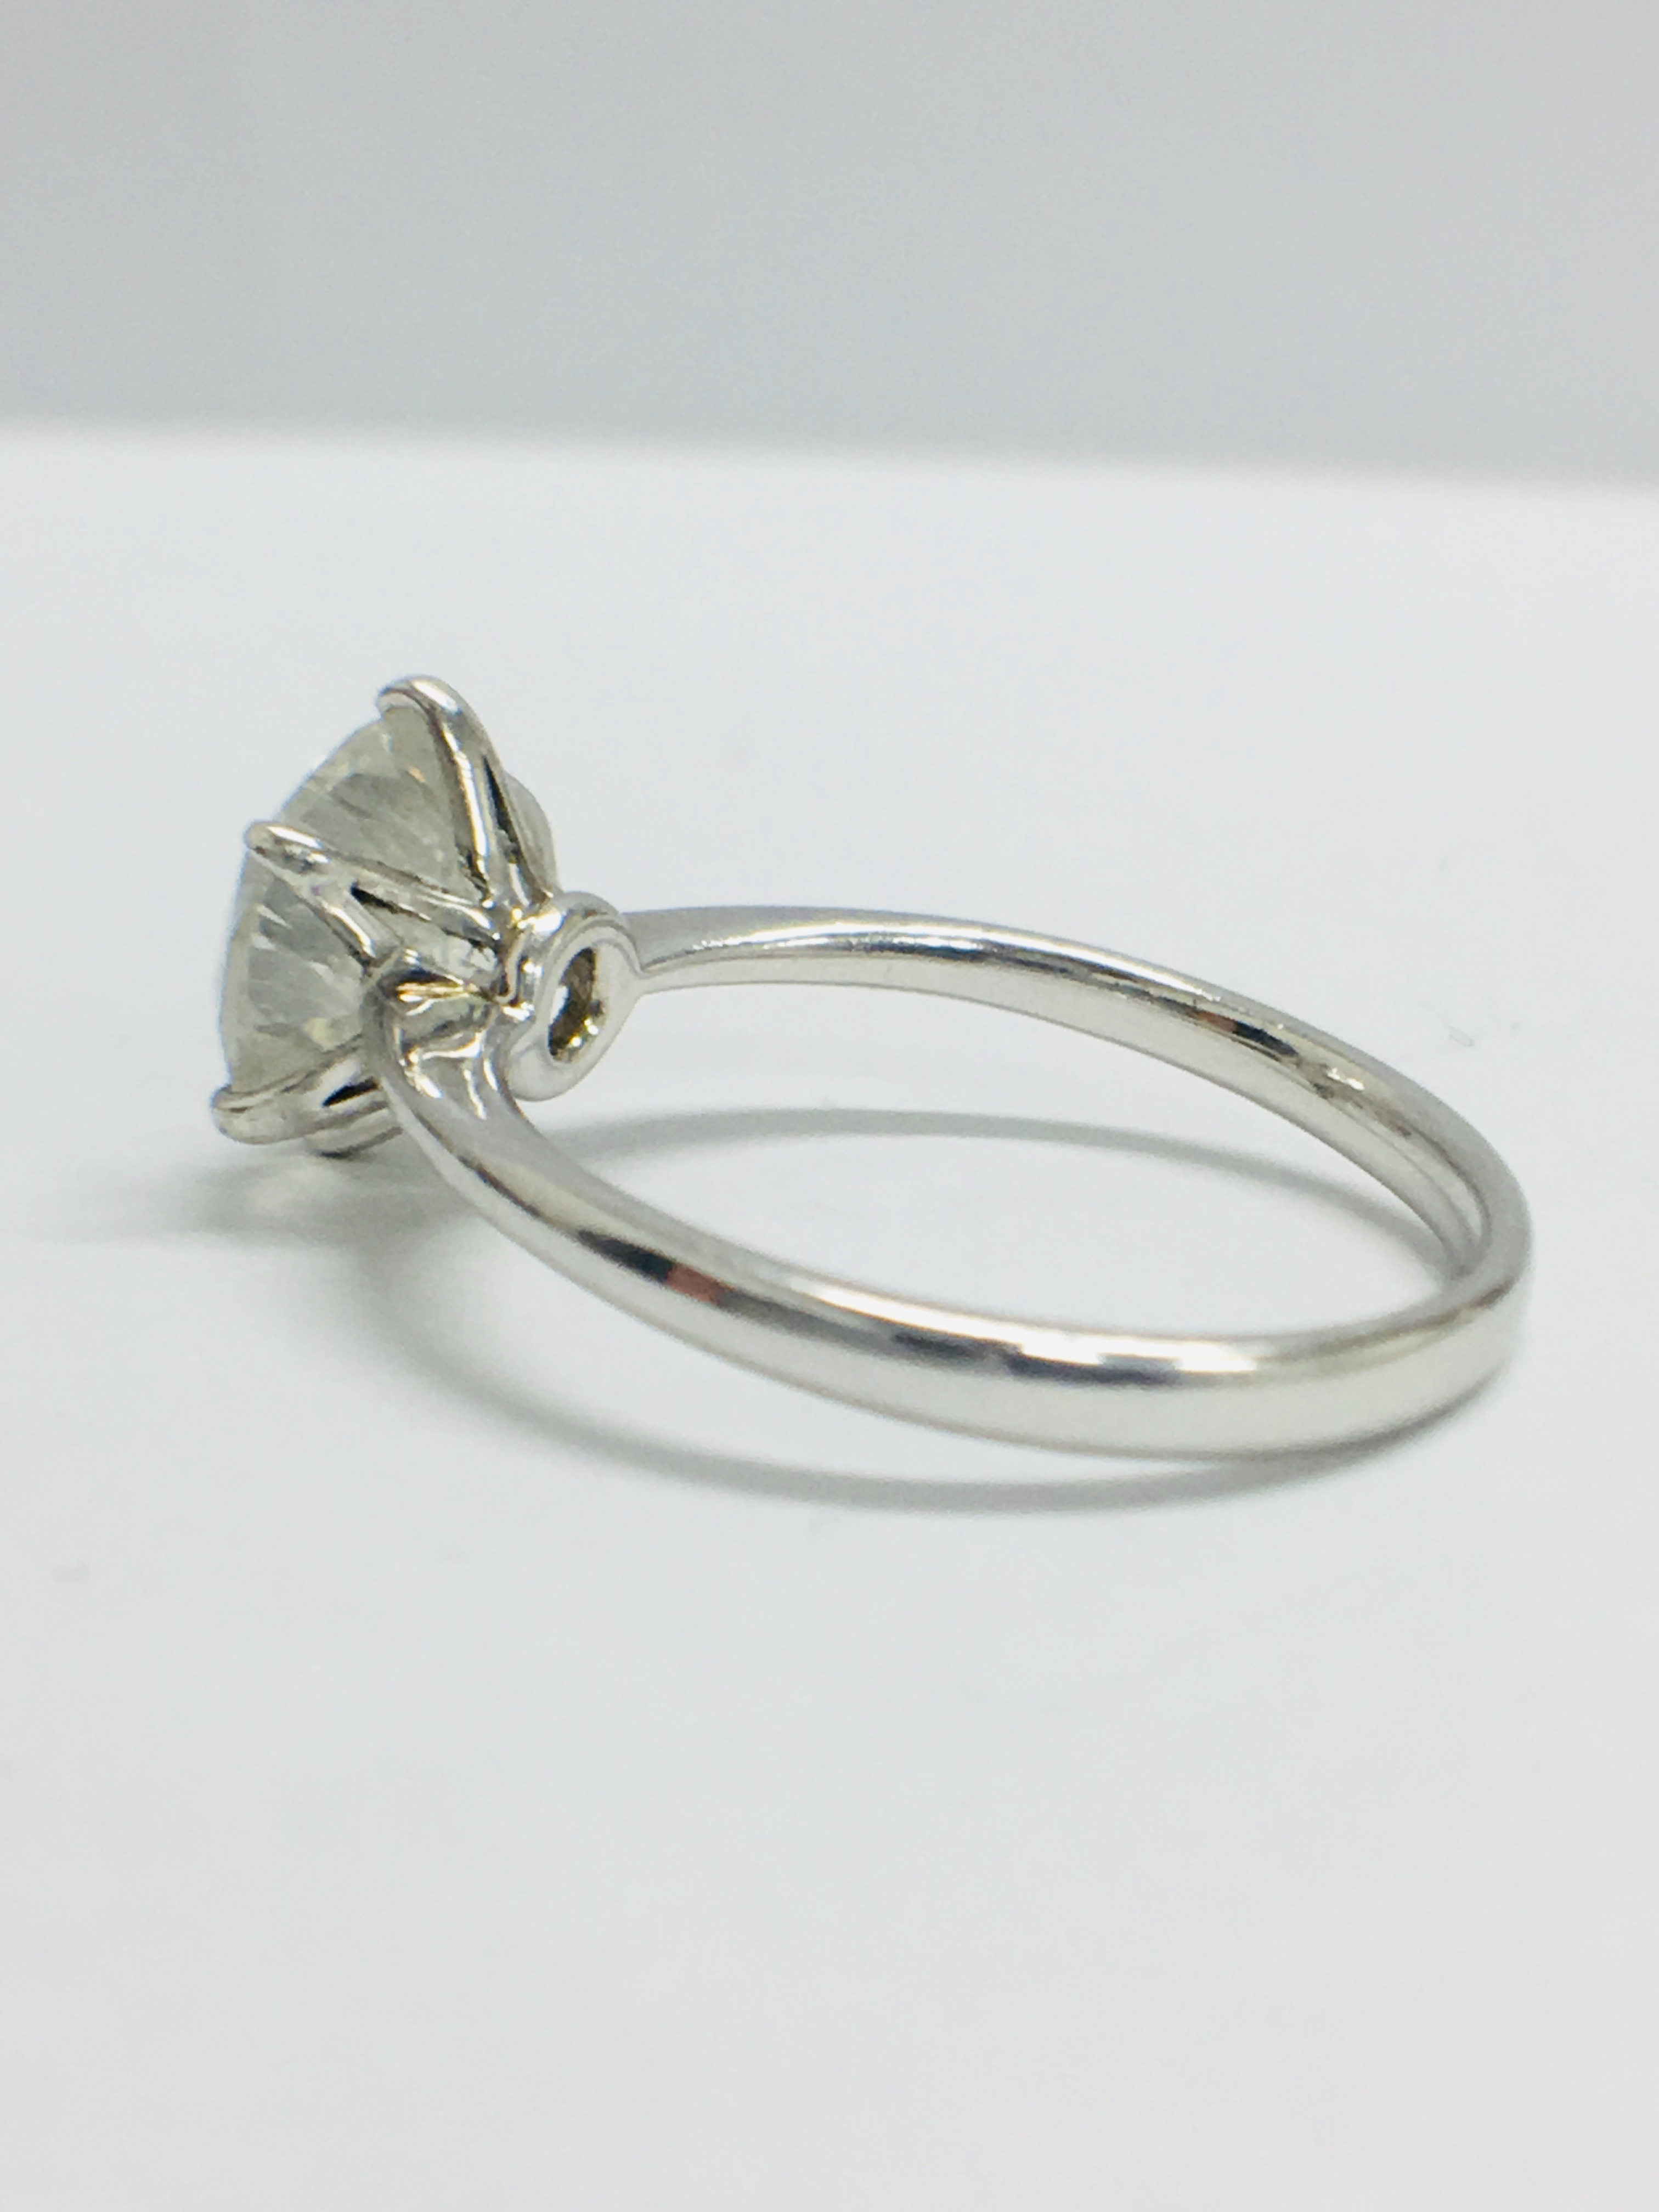 1.80ct diamond solitaire ring set in Platinum setting - Image 4 of 10